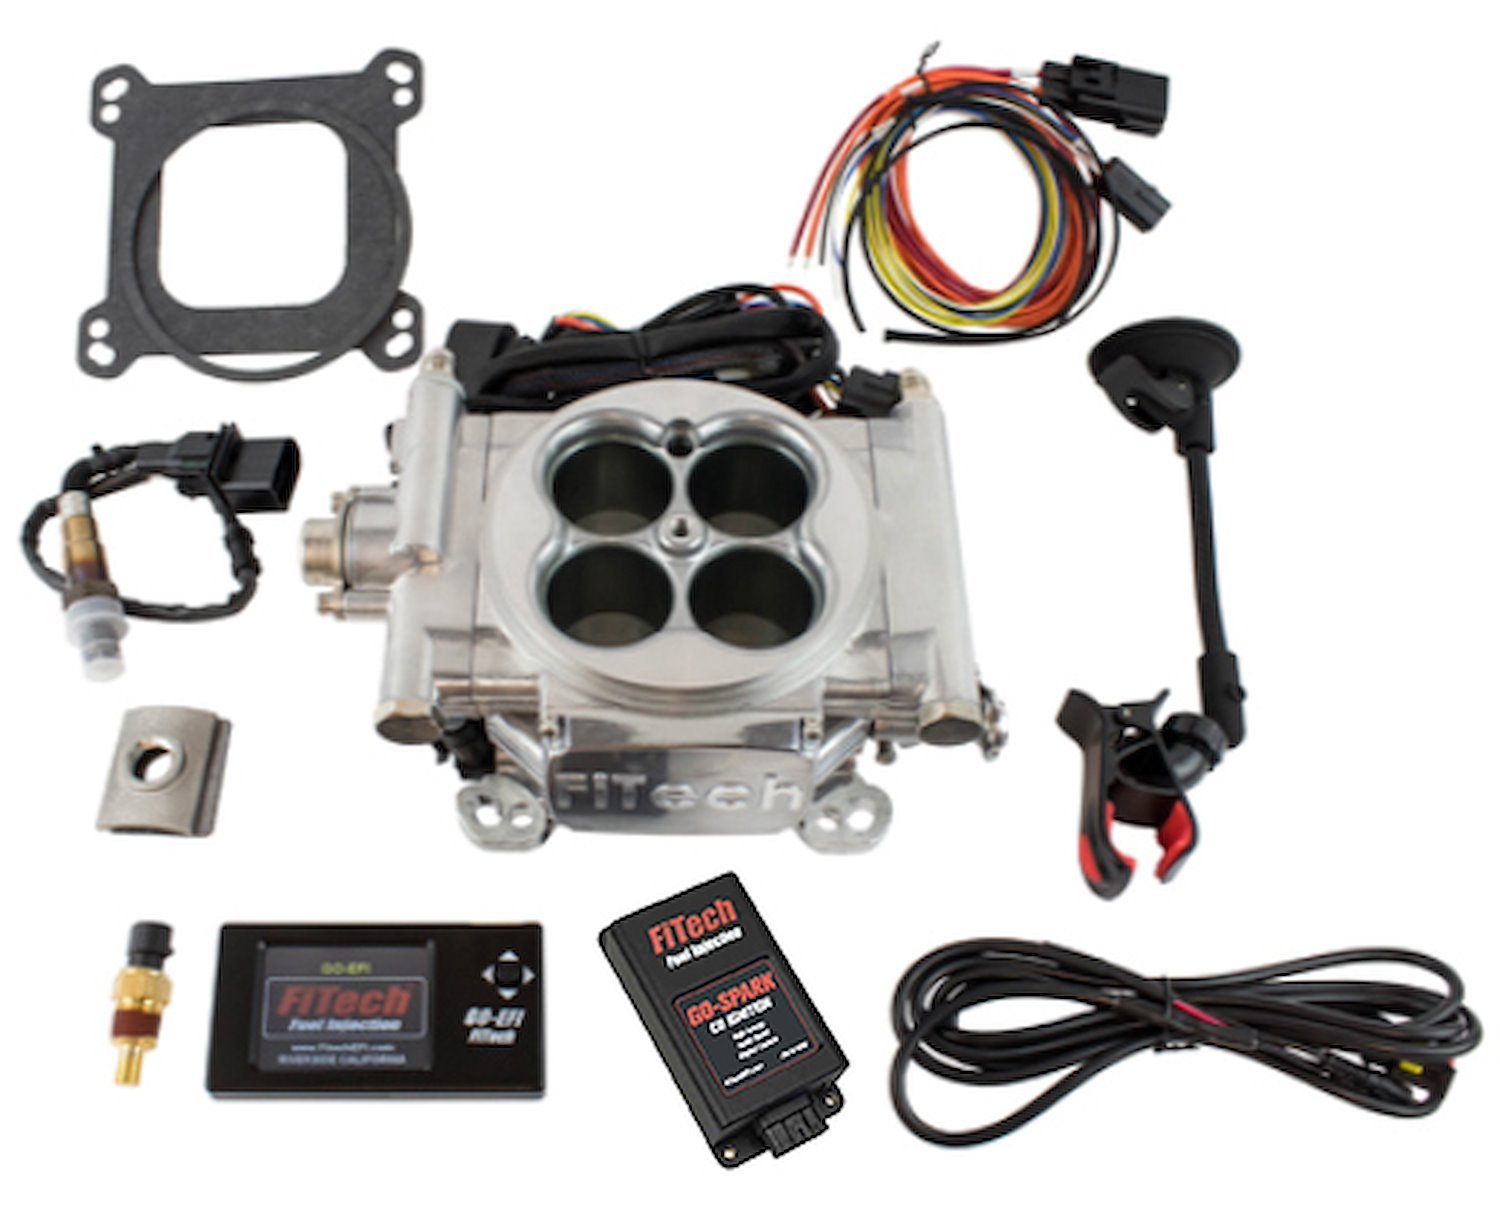 Go EFI-4 600 HP Throttle Body Fuel Injection Master Kit With CDI Box - Bright Aluminum